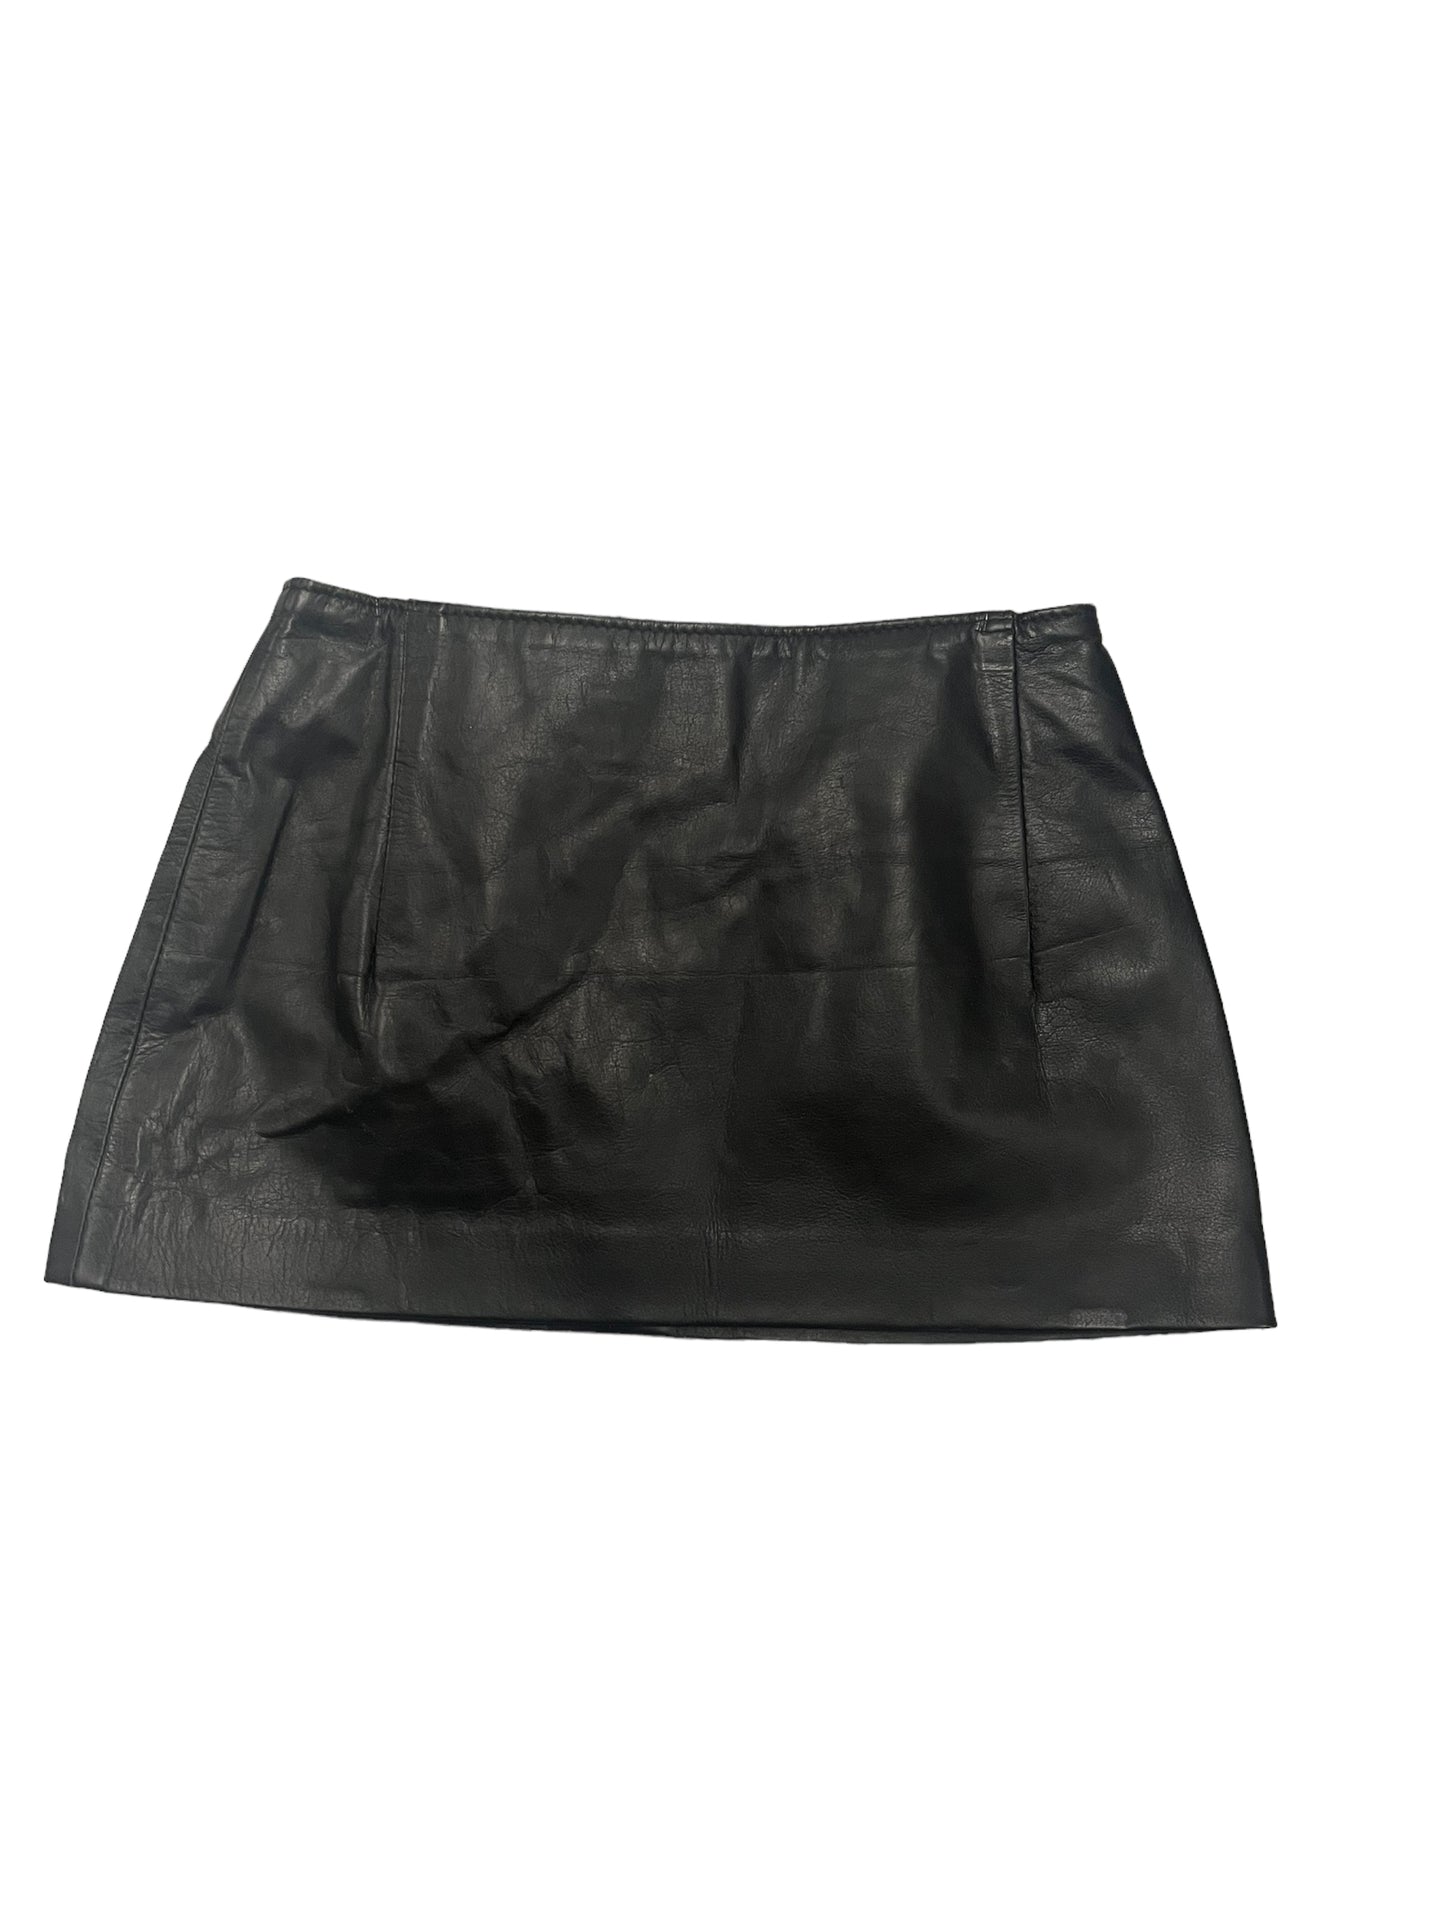 Fashion World - LL71 - Provocative Black Leather Skirt